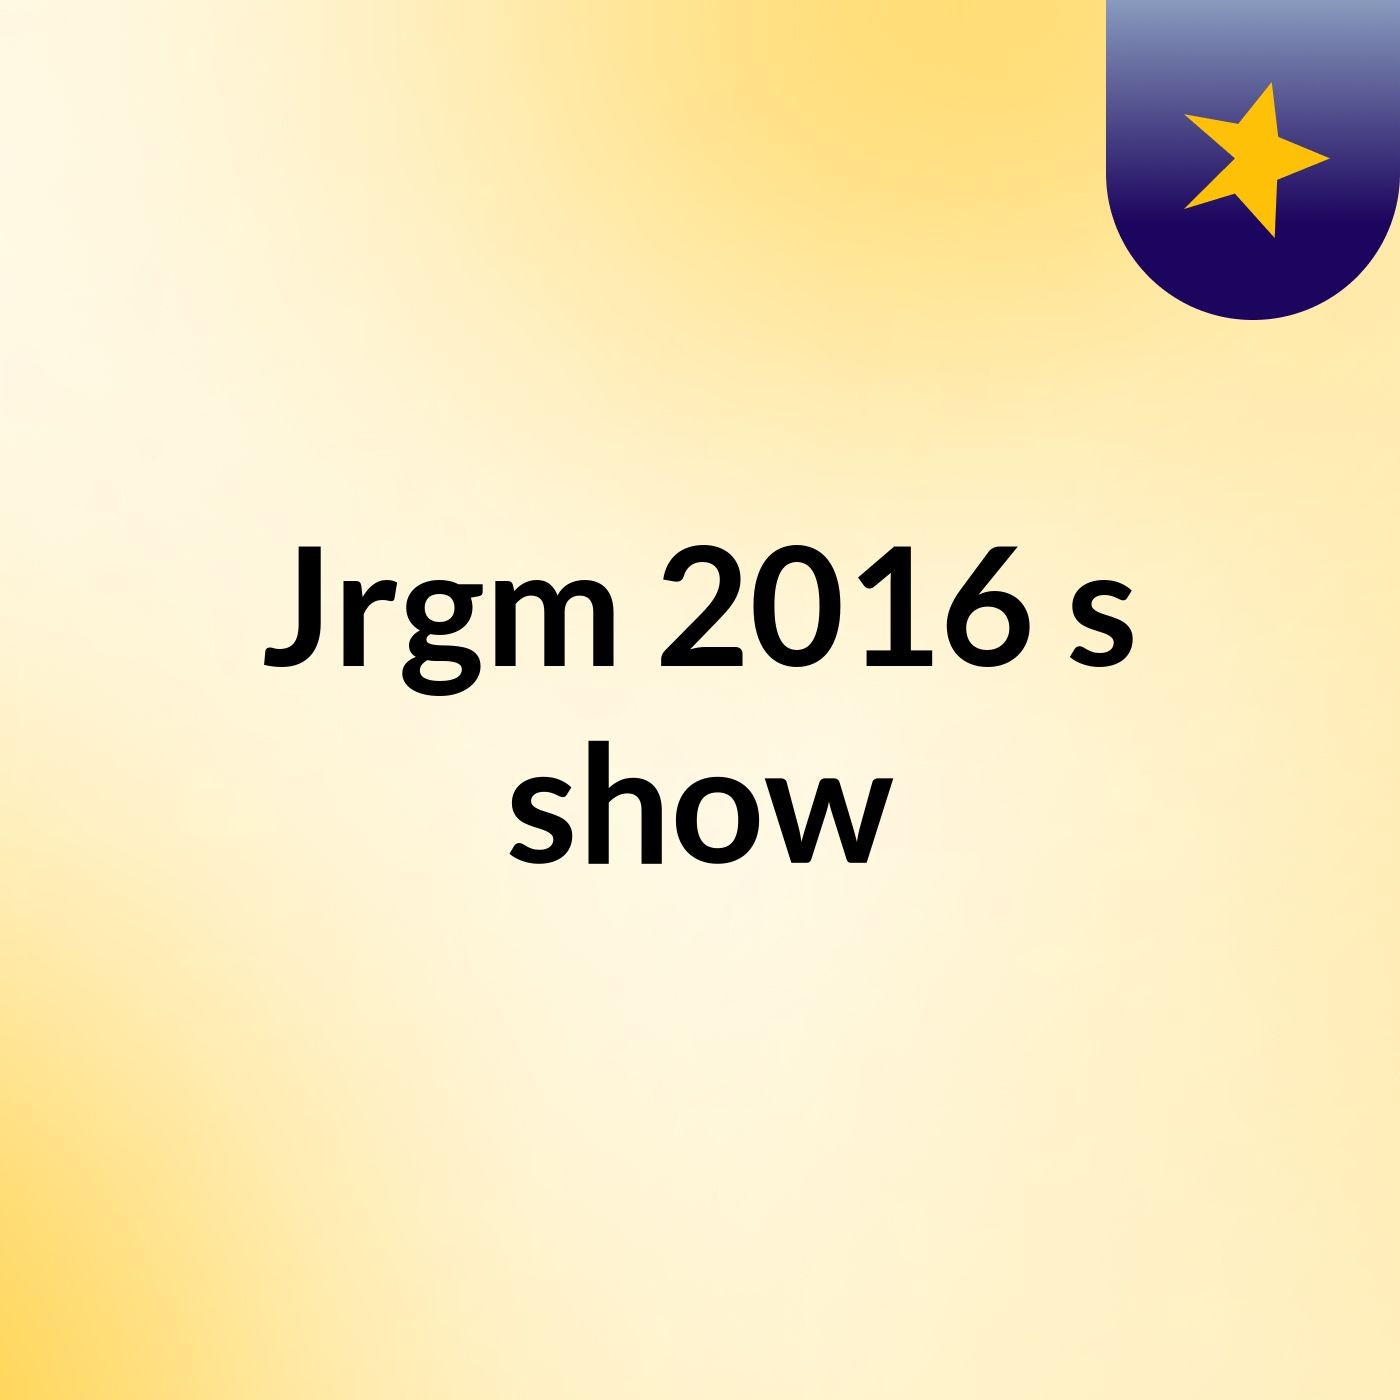 Jrgm 2016's show